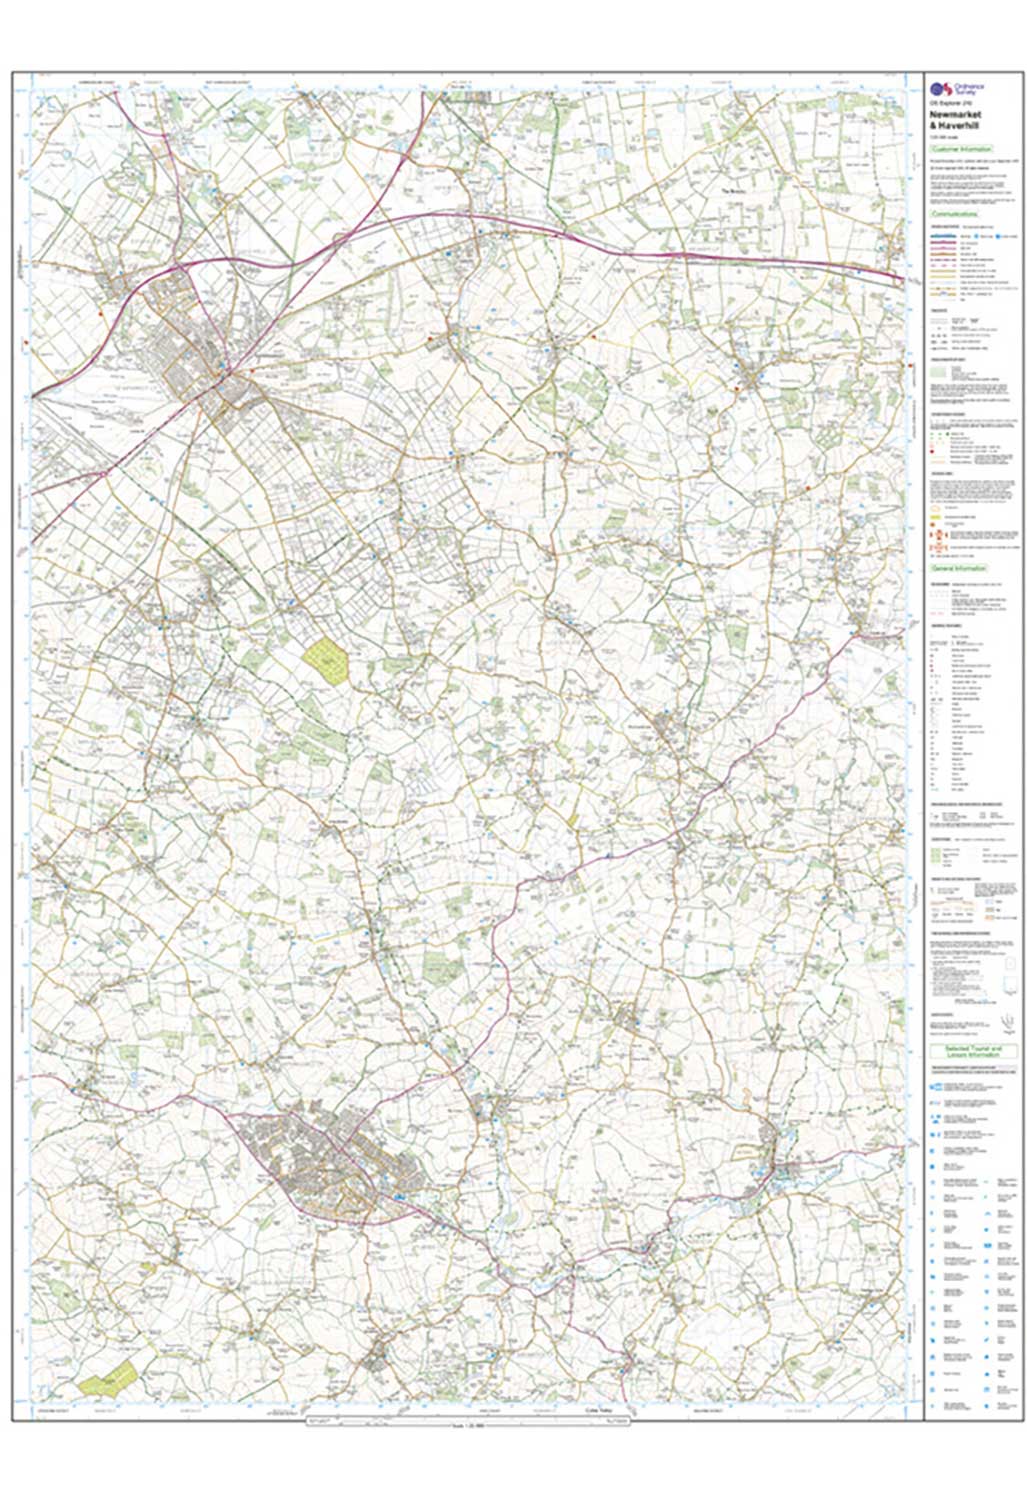 Ordnance Survey Newmarket & Haverhill - OS Explorer 210 Map